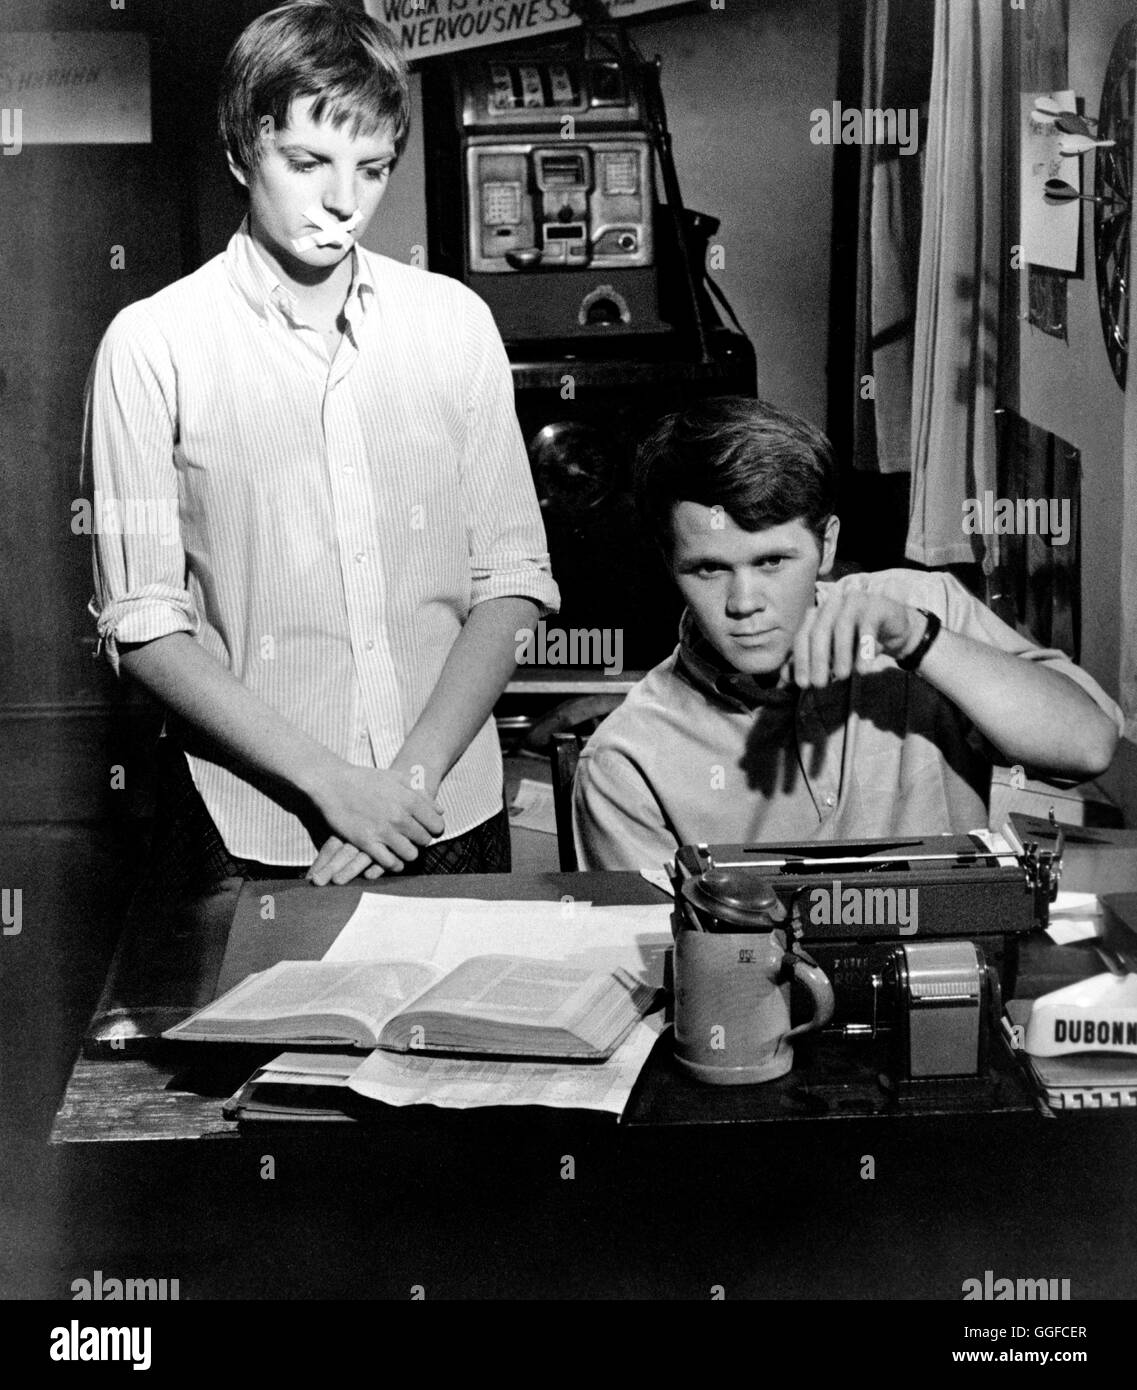 POOKIE / il cuculo Sterile USA 1969 / Alan J. Pakula Liza Minnelli (Pookie), WENDELL BURTON (Jerry)/ Regie: Alan J. Pakula aka. Il cuculo sterile Foto Stock